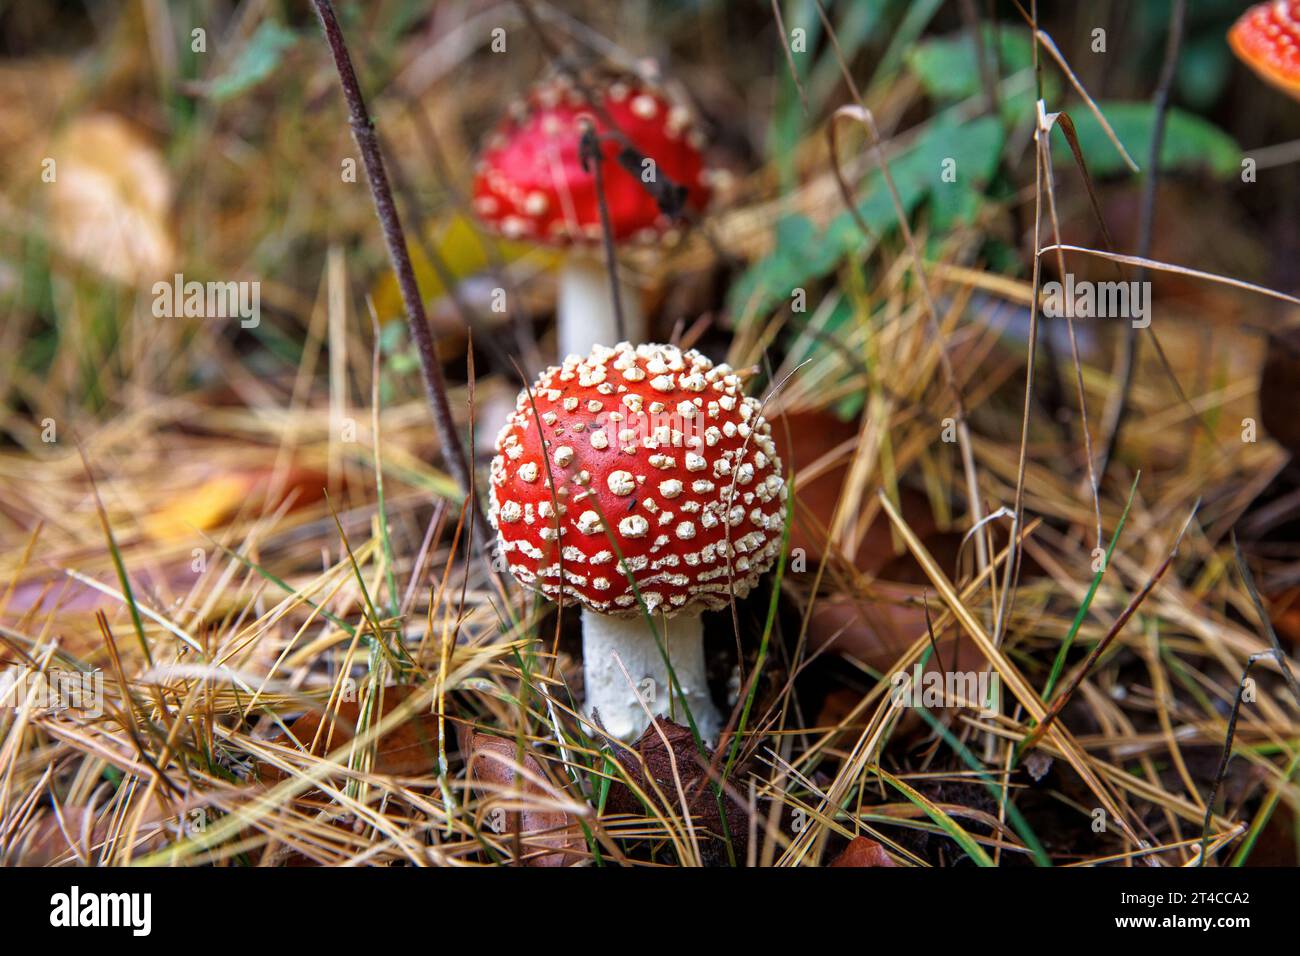 Mosca funghi agarici (lat. Amanita muscaria), Renania settentrionale-Vestfalia, Germania. Fliegenpilze (lat. Amanita muscaria), Nordrhein-Westfalen, Deutschland. Foto Stock